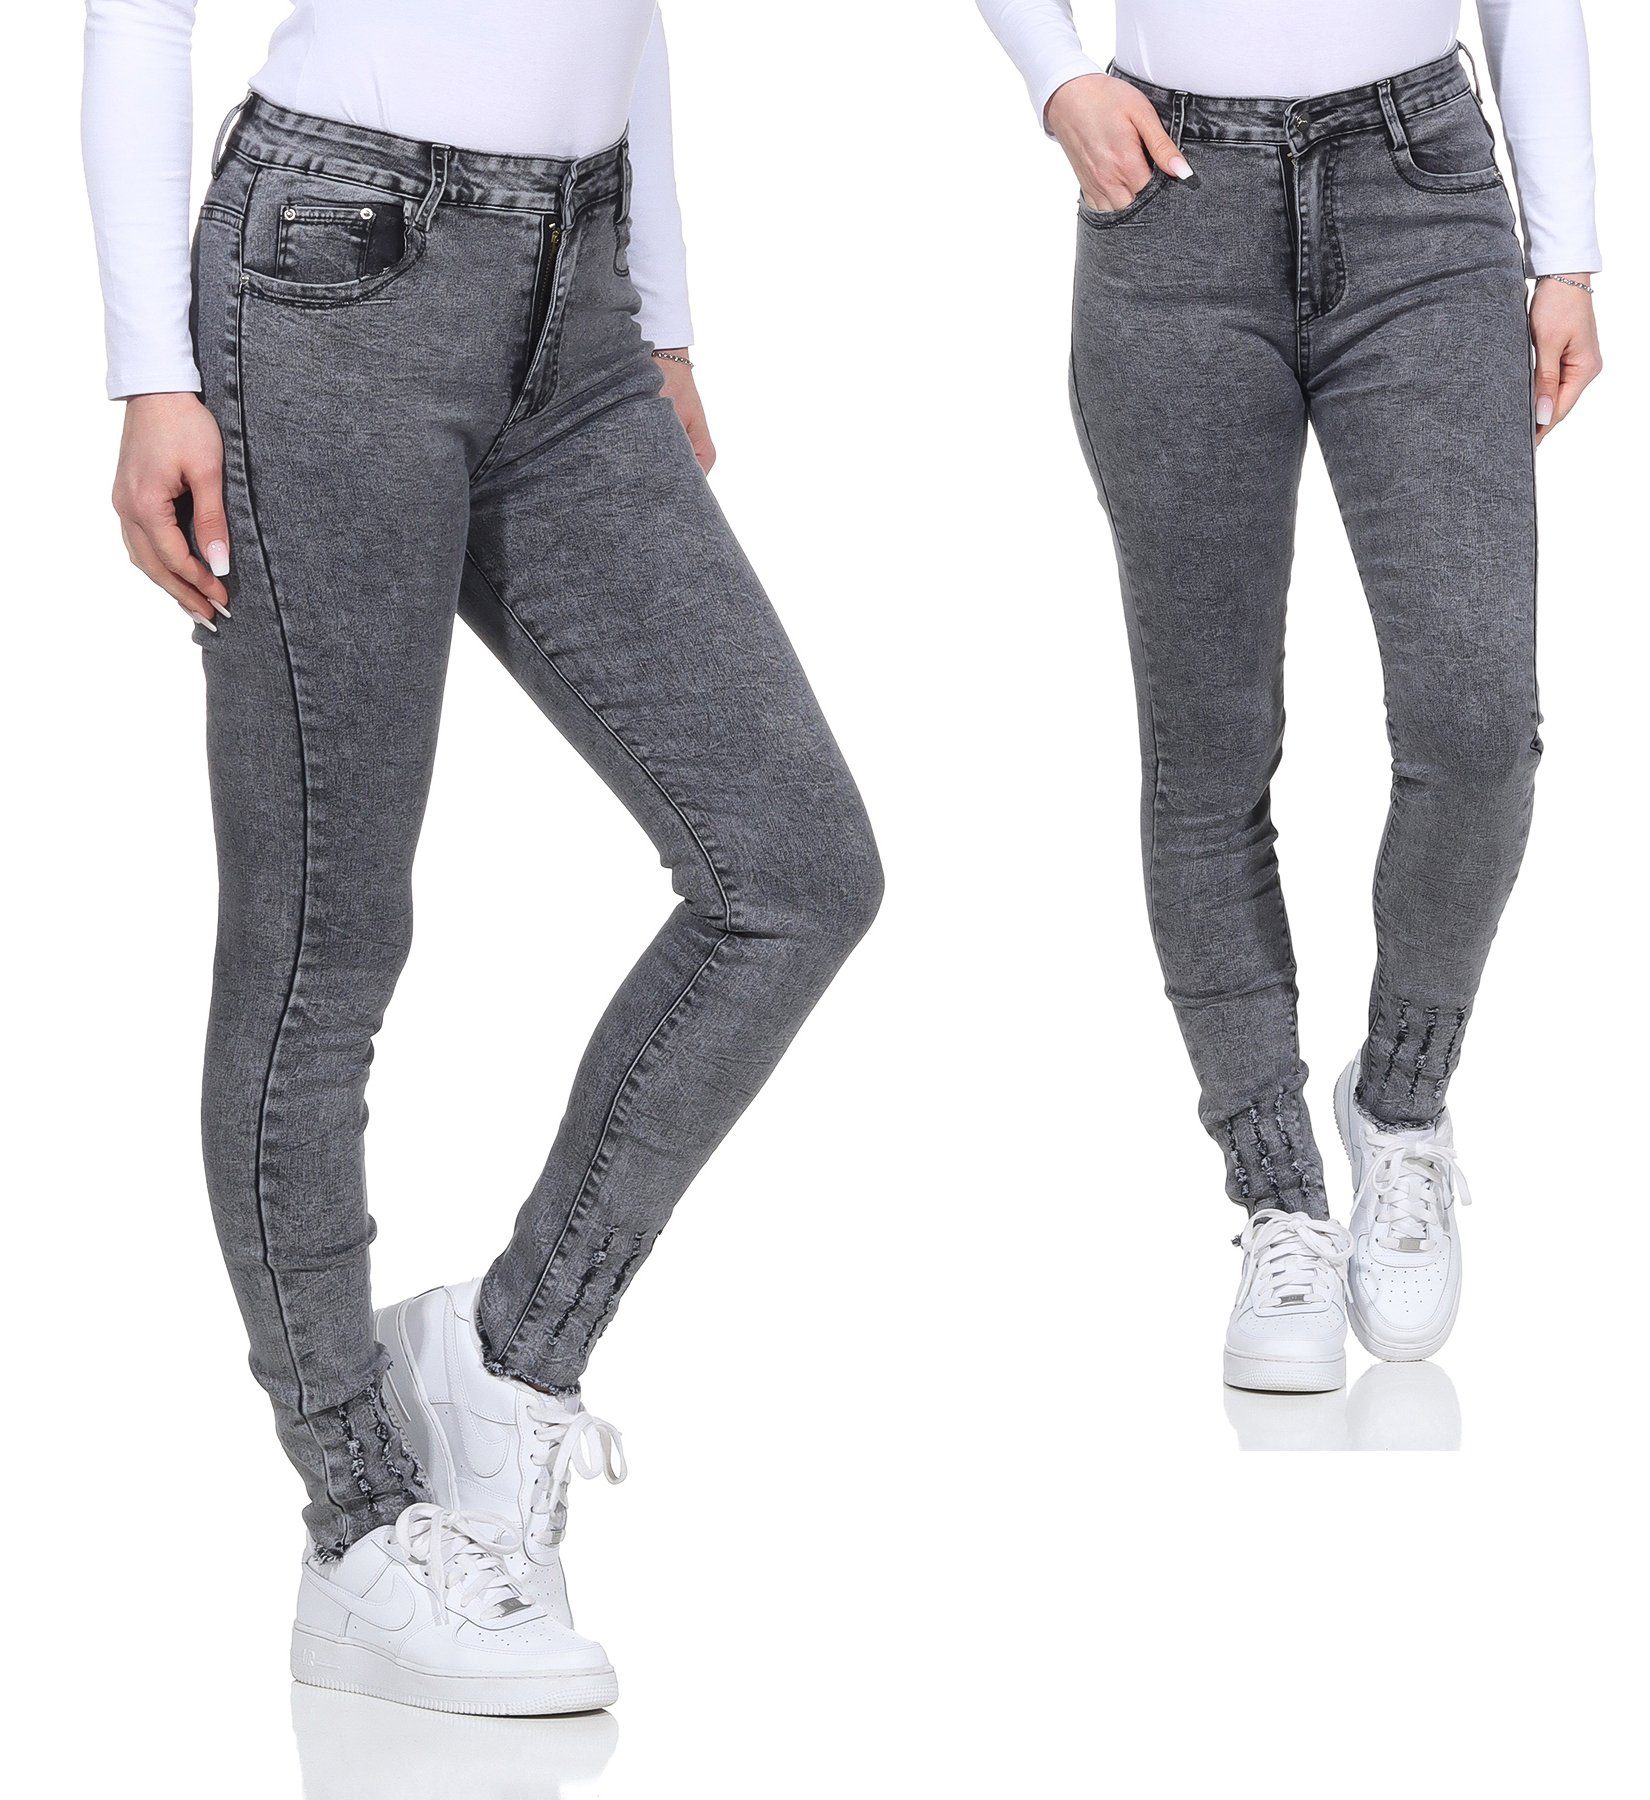 5-Pocket-Jeans Damenmode Look Distressed Jeanshosen Look Stretch Jeans Grau Destroyed für Damen Aurela moderner